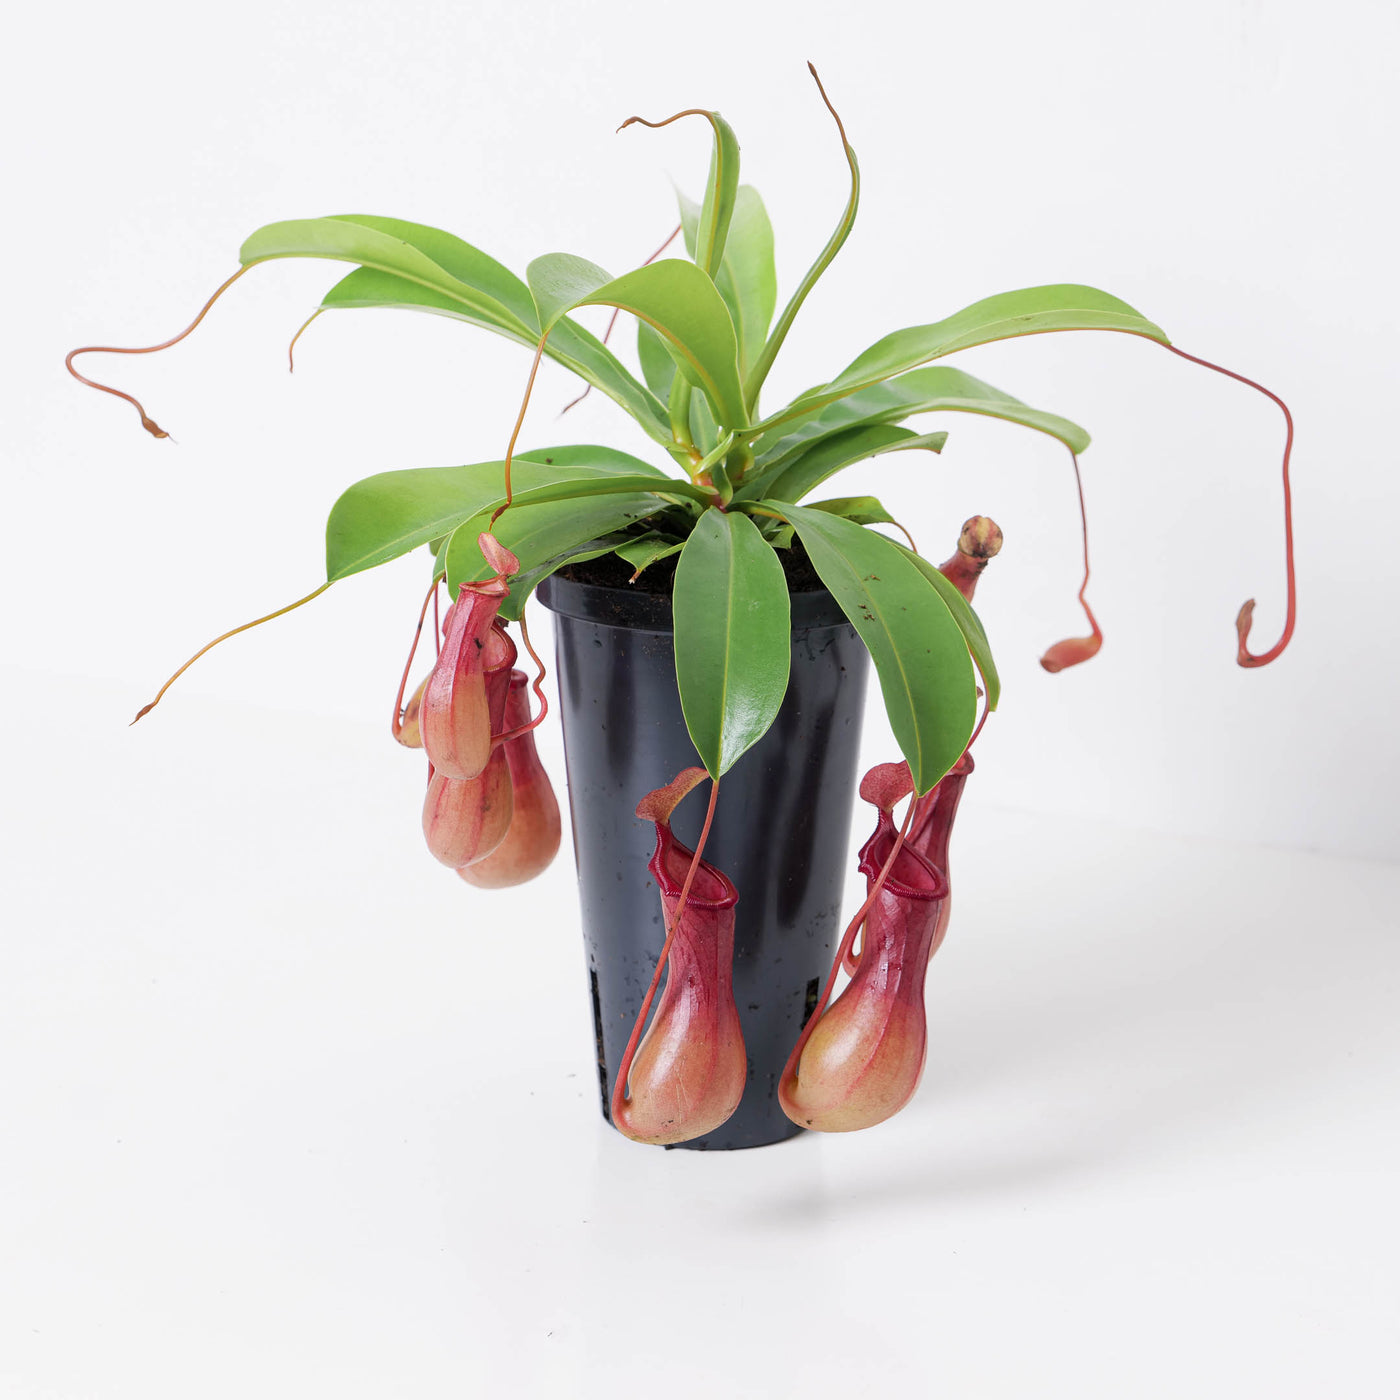 Nepenthes alata | Monkey Jar Plant | Pitcher Plant - House of Kojo